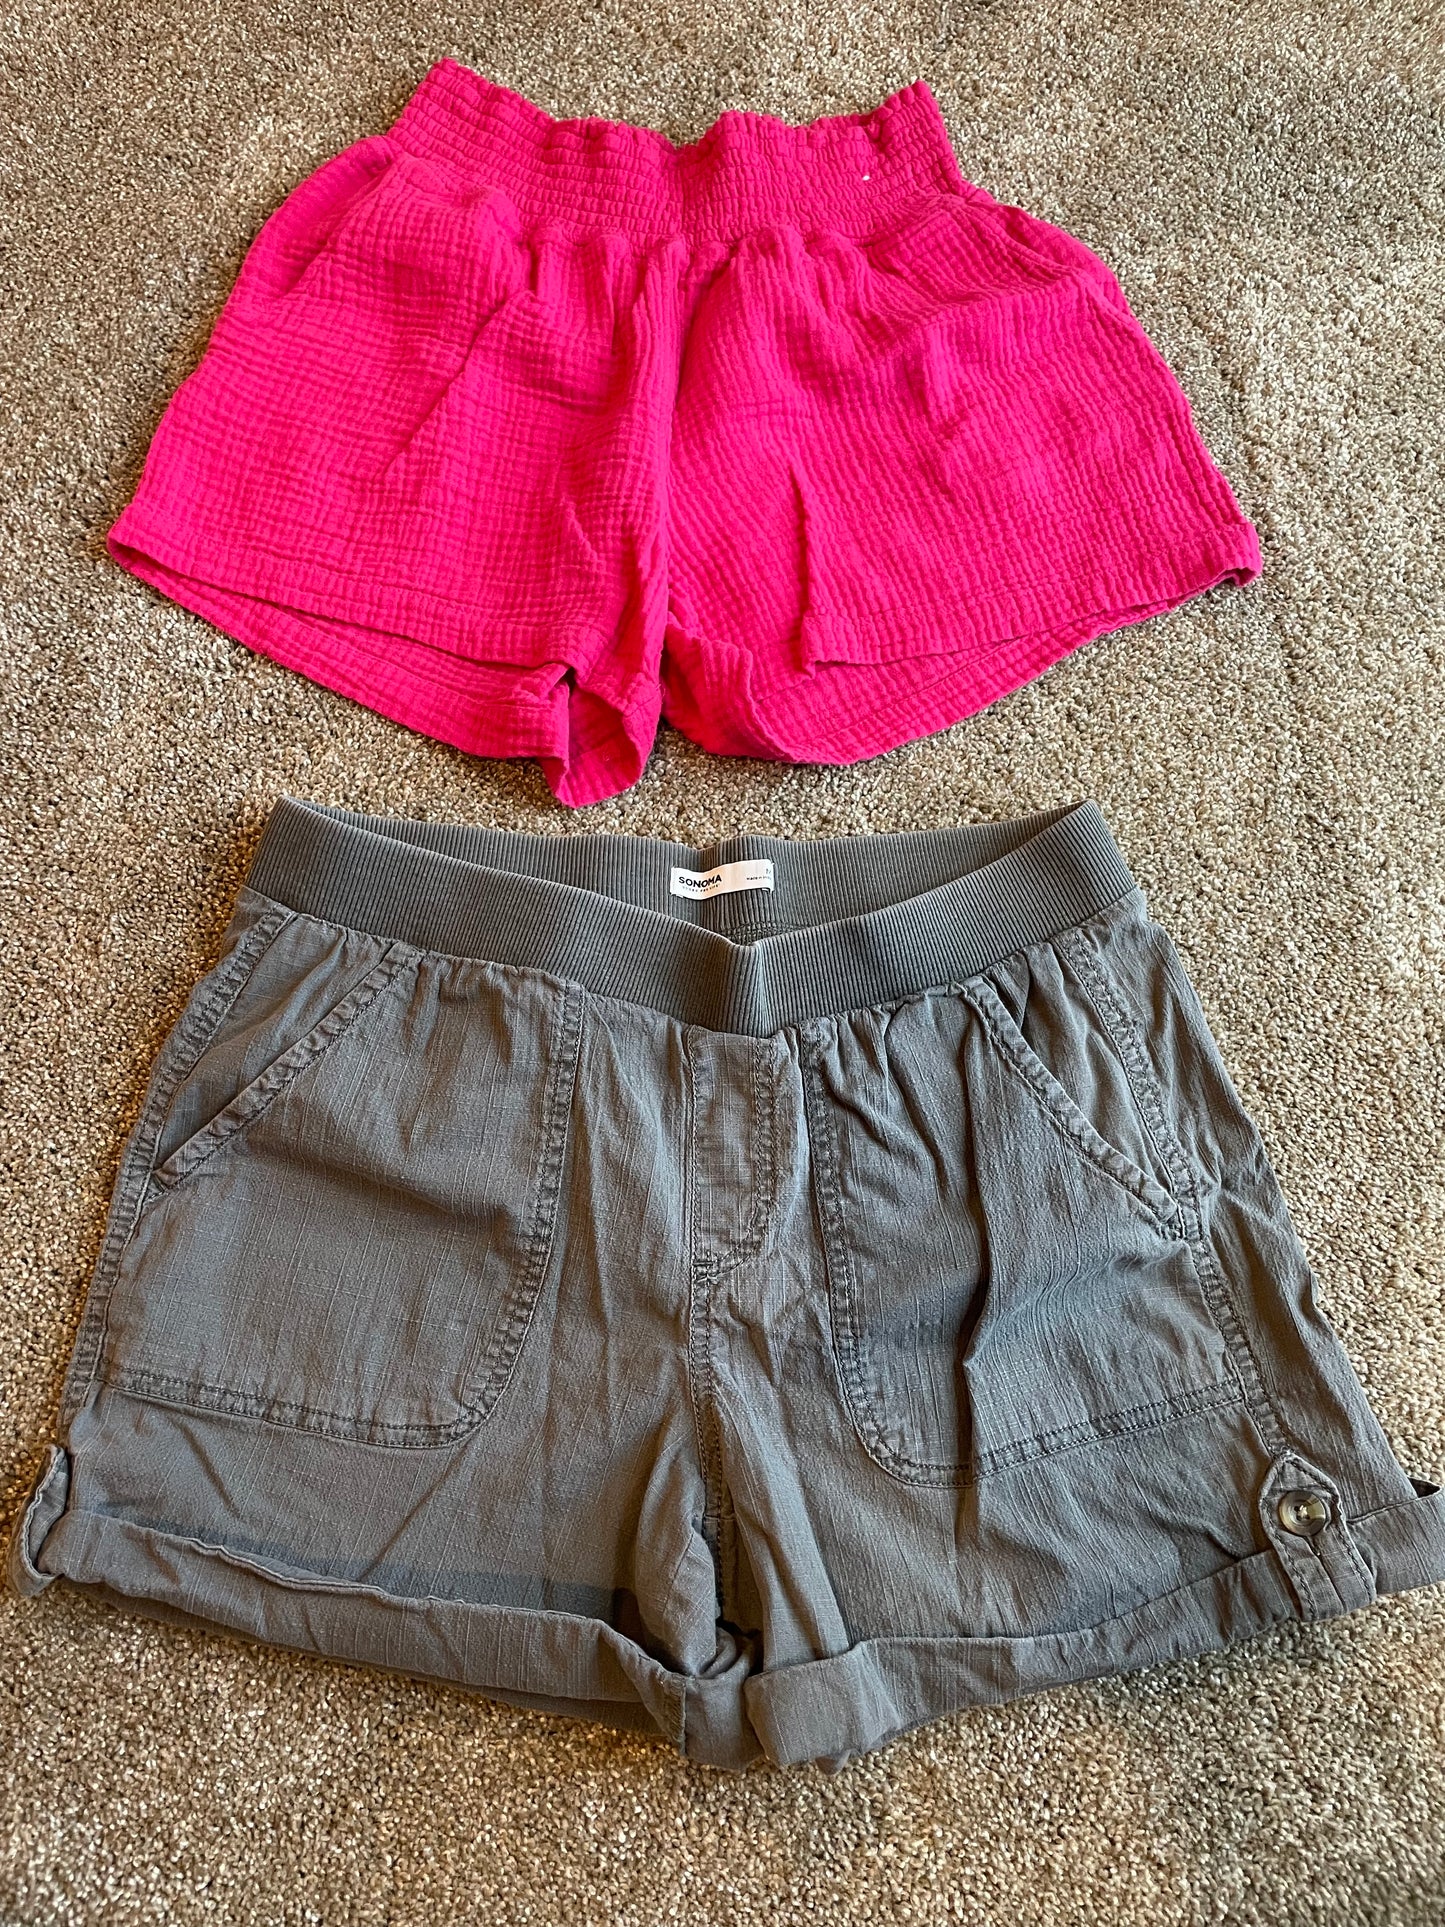 Women’s medium shorts bundle